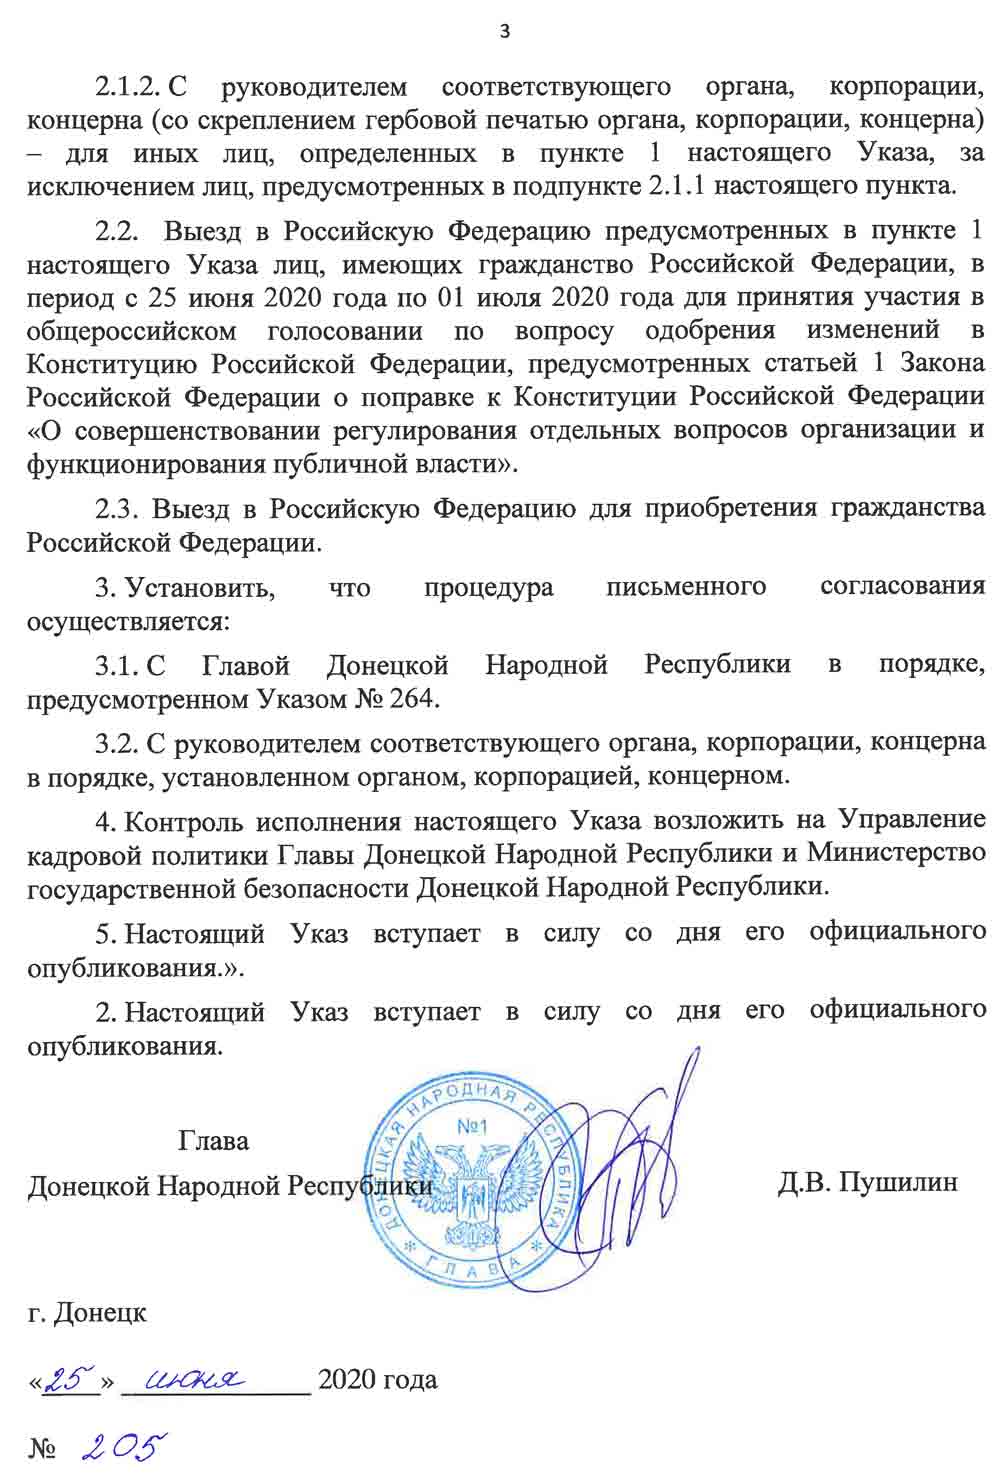 Указом Главы ДНР № 205 от 25 июня 2020 года